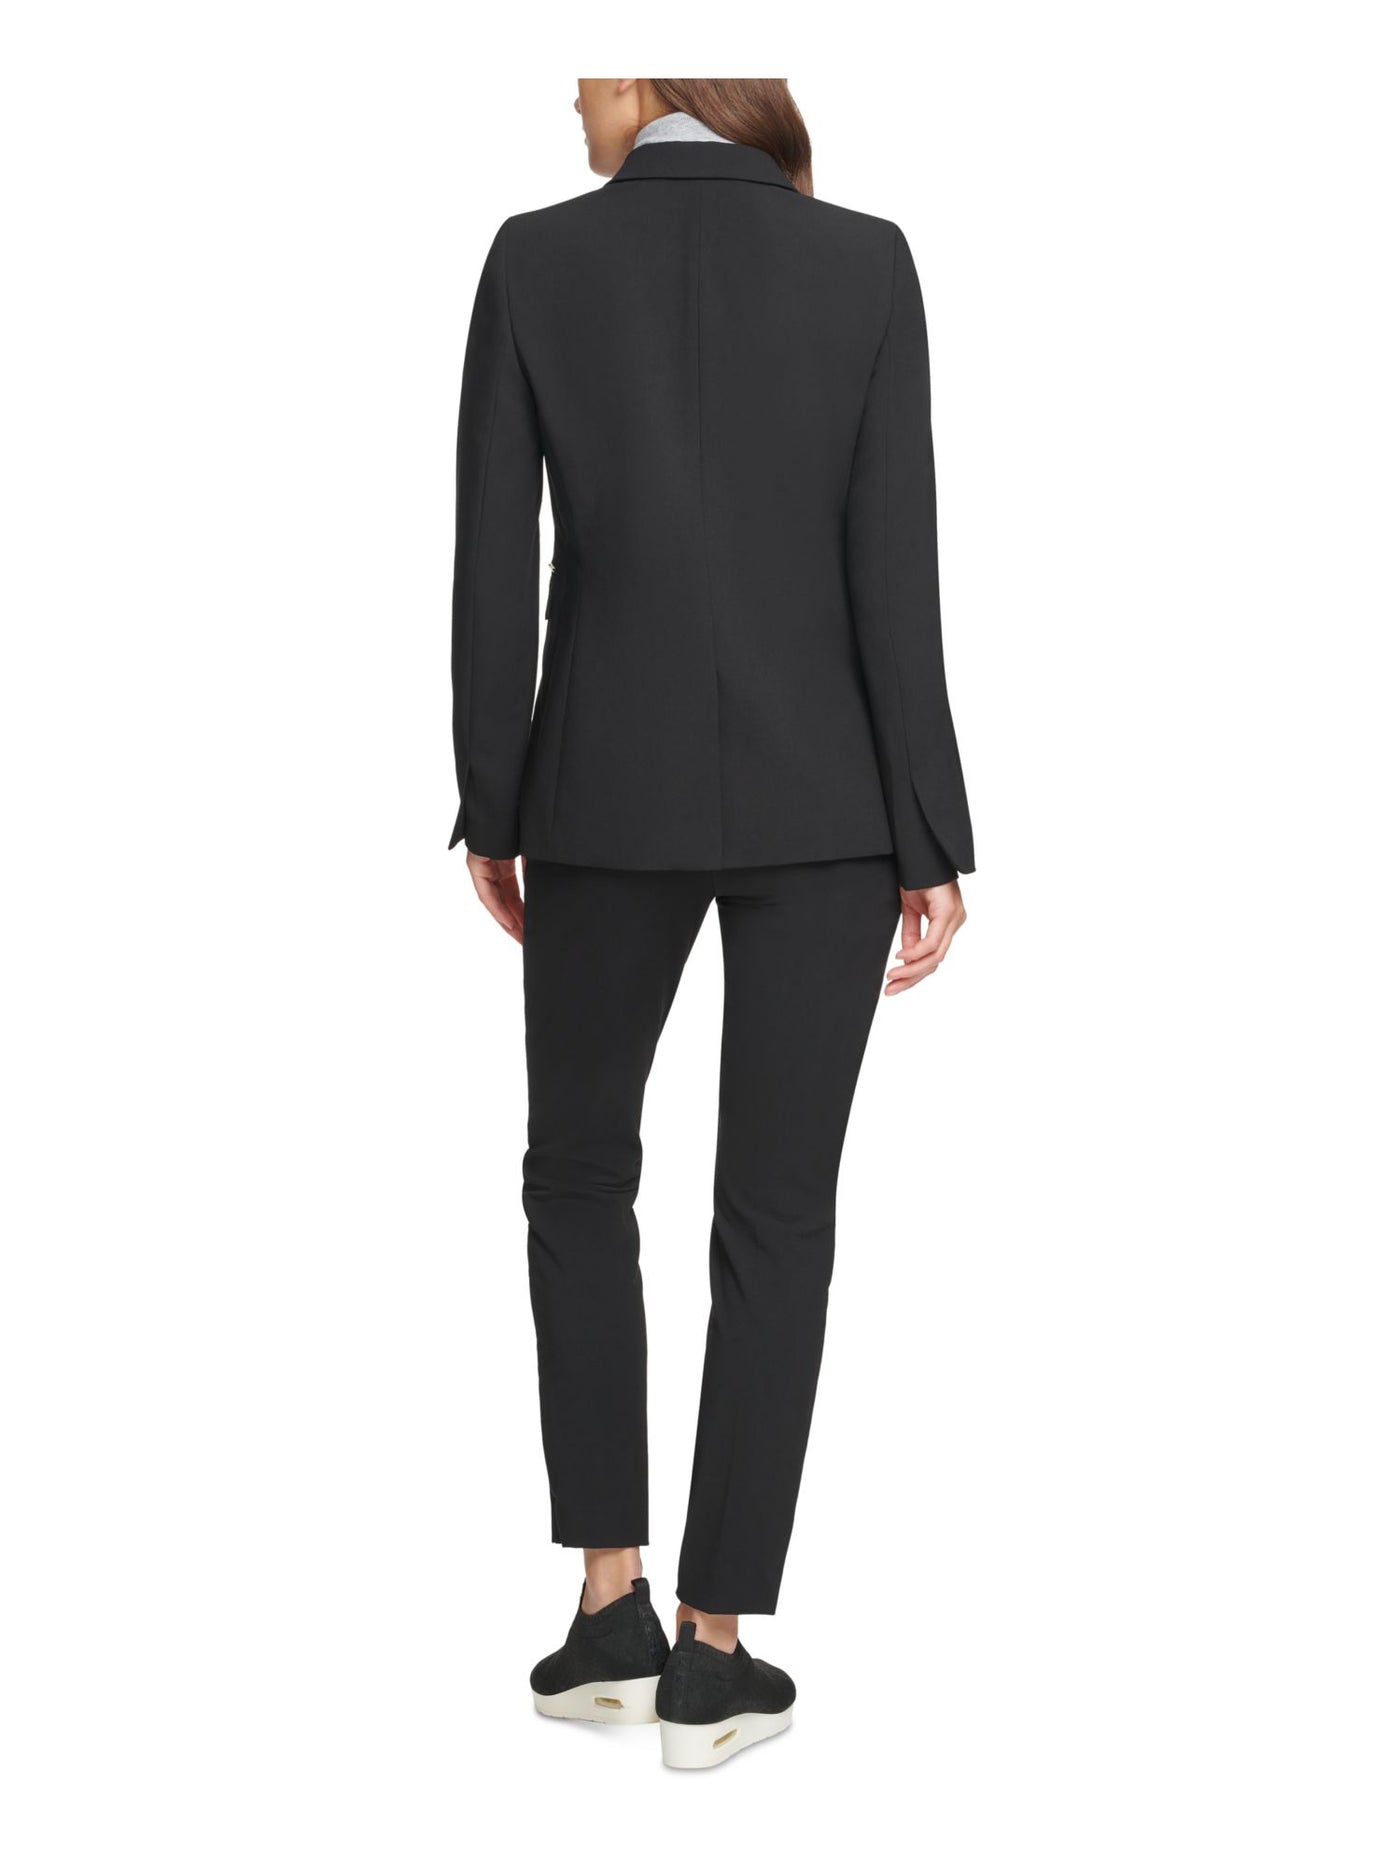 DKNY Womens Black Zippered Pocketed Mock Neck Detachable Sweater Wear To Work Blazer Jacket 2